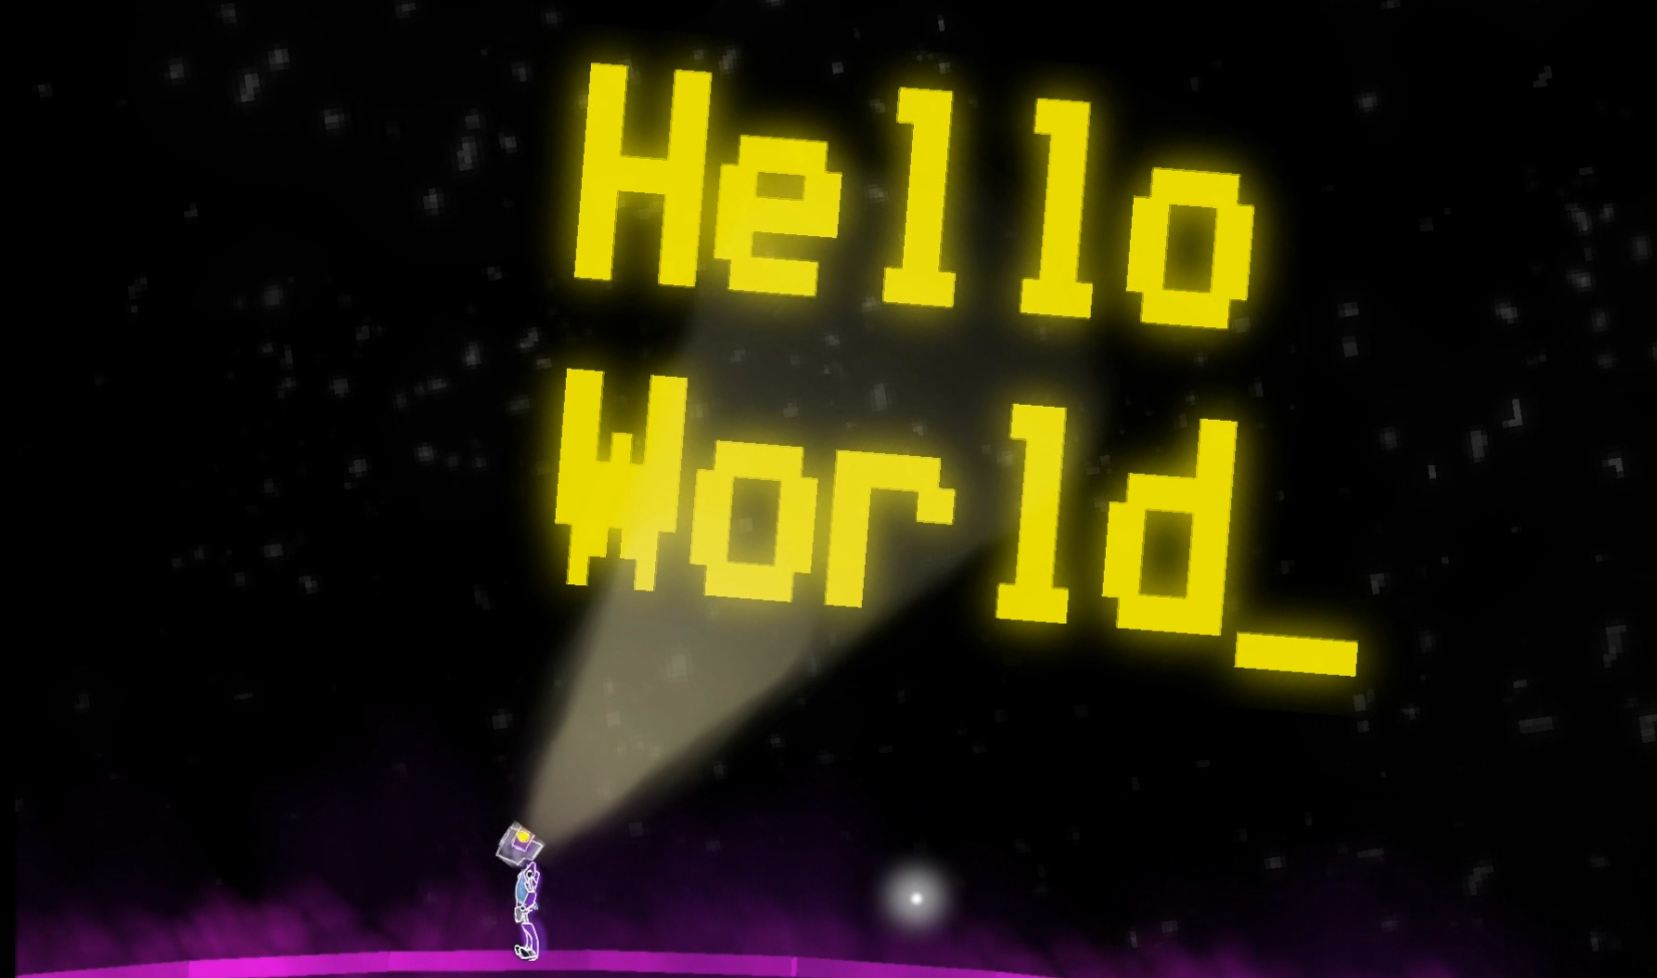 Hello трек. Hello World. Hello World игра. Hello hello World игра. Hello World заставка.